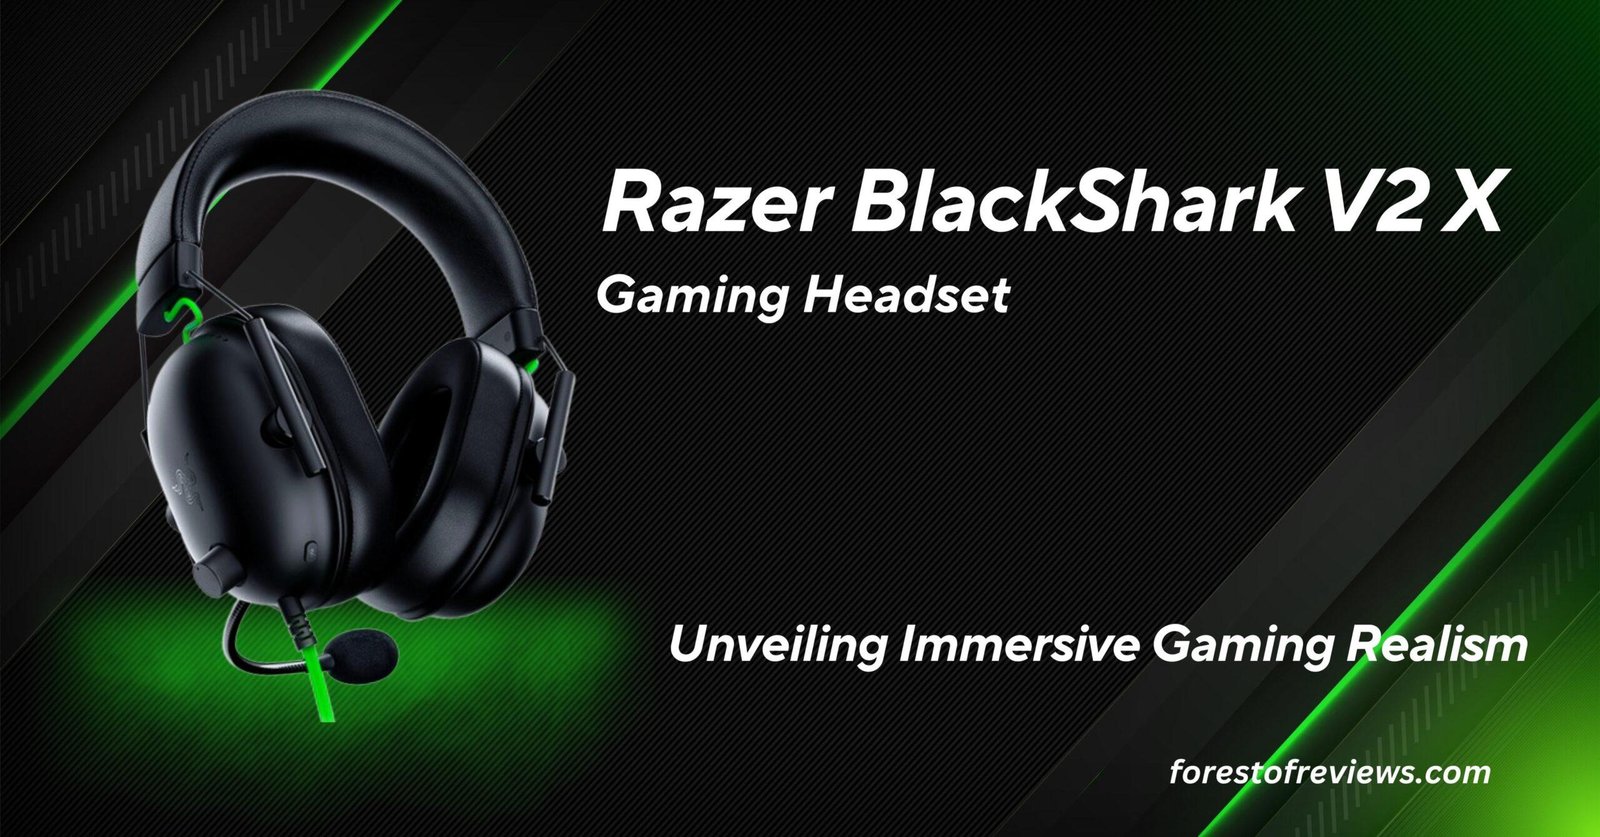 Razer BlackShark V2 X Featured image